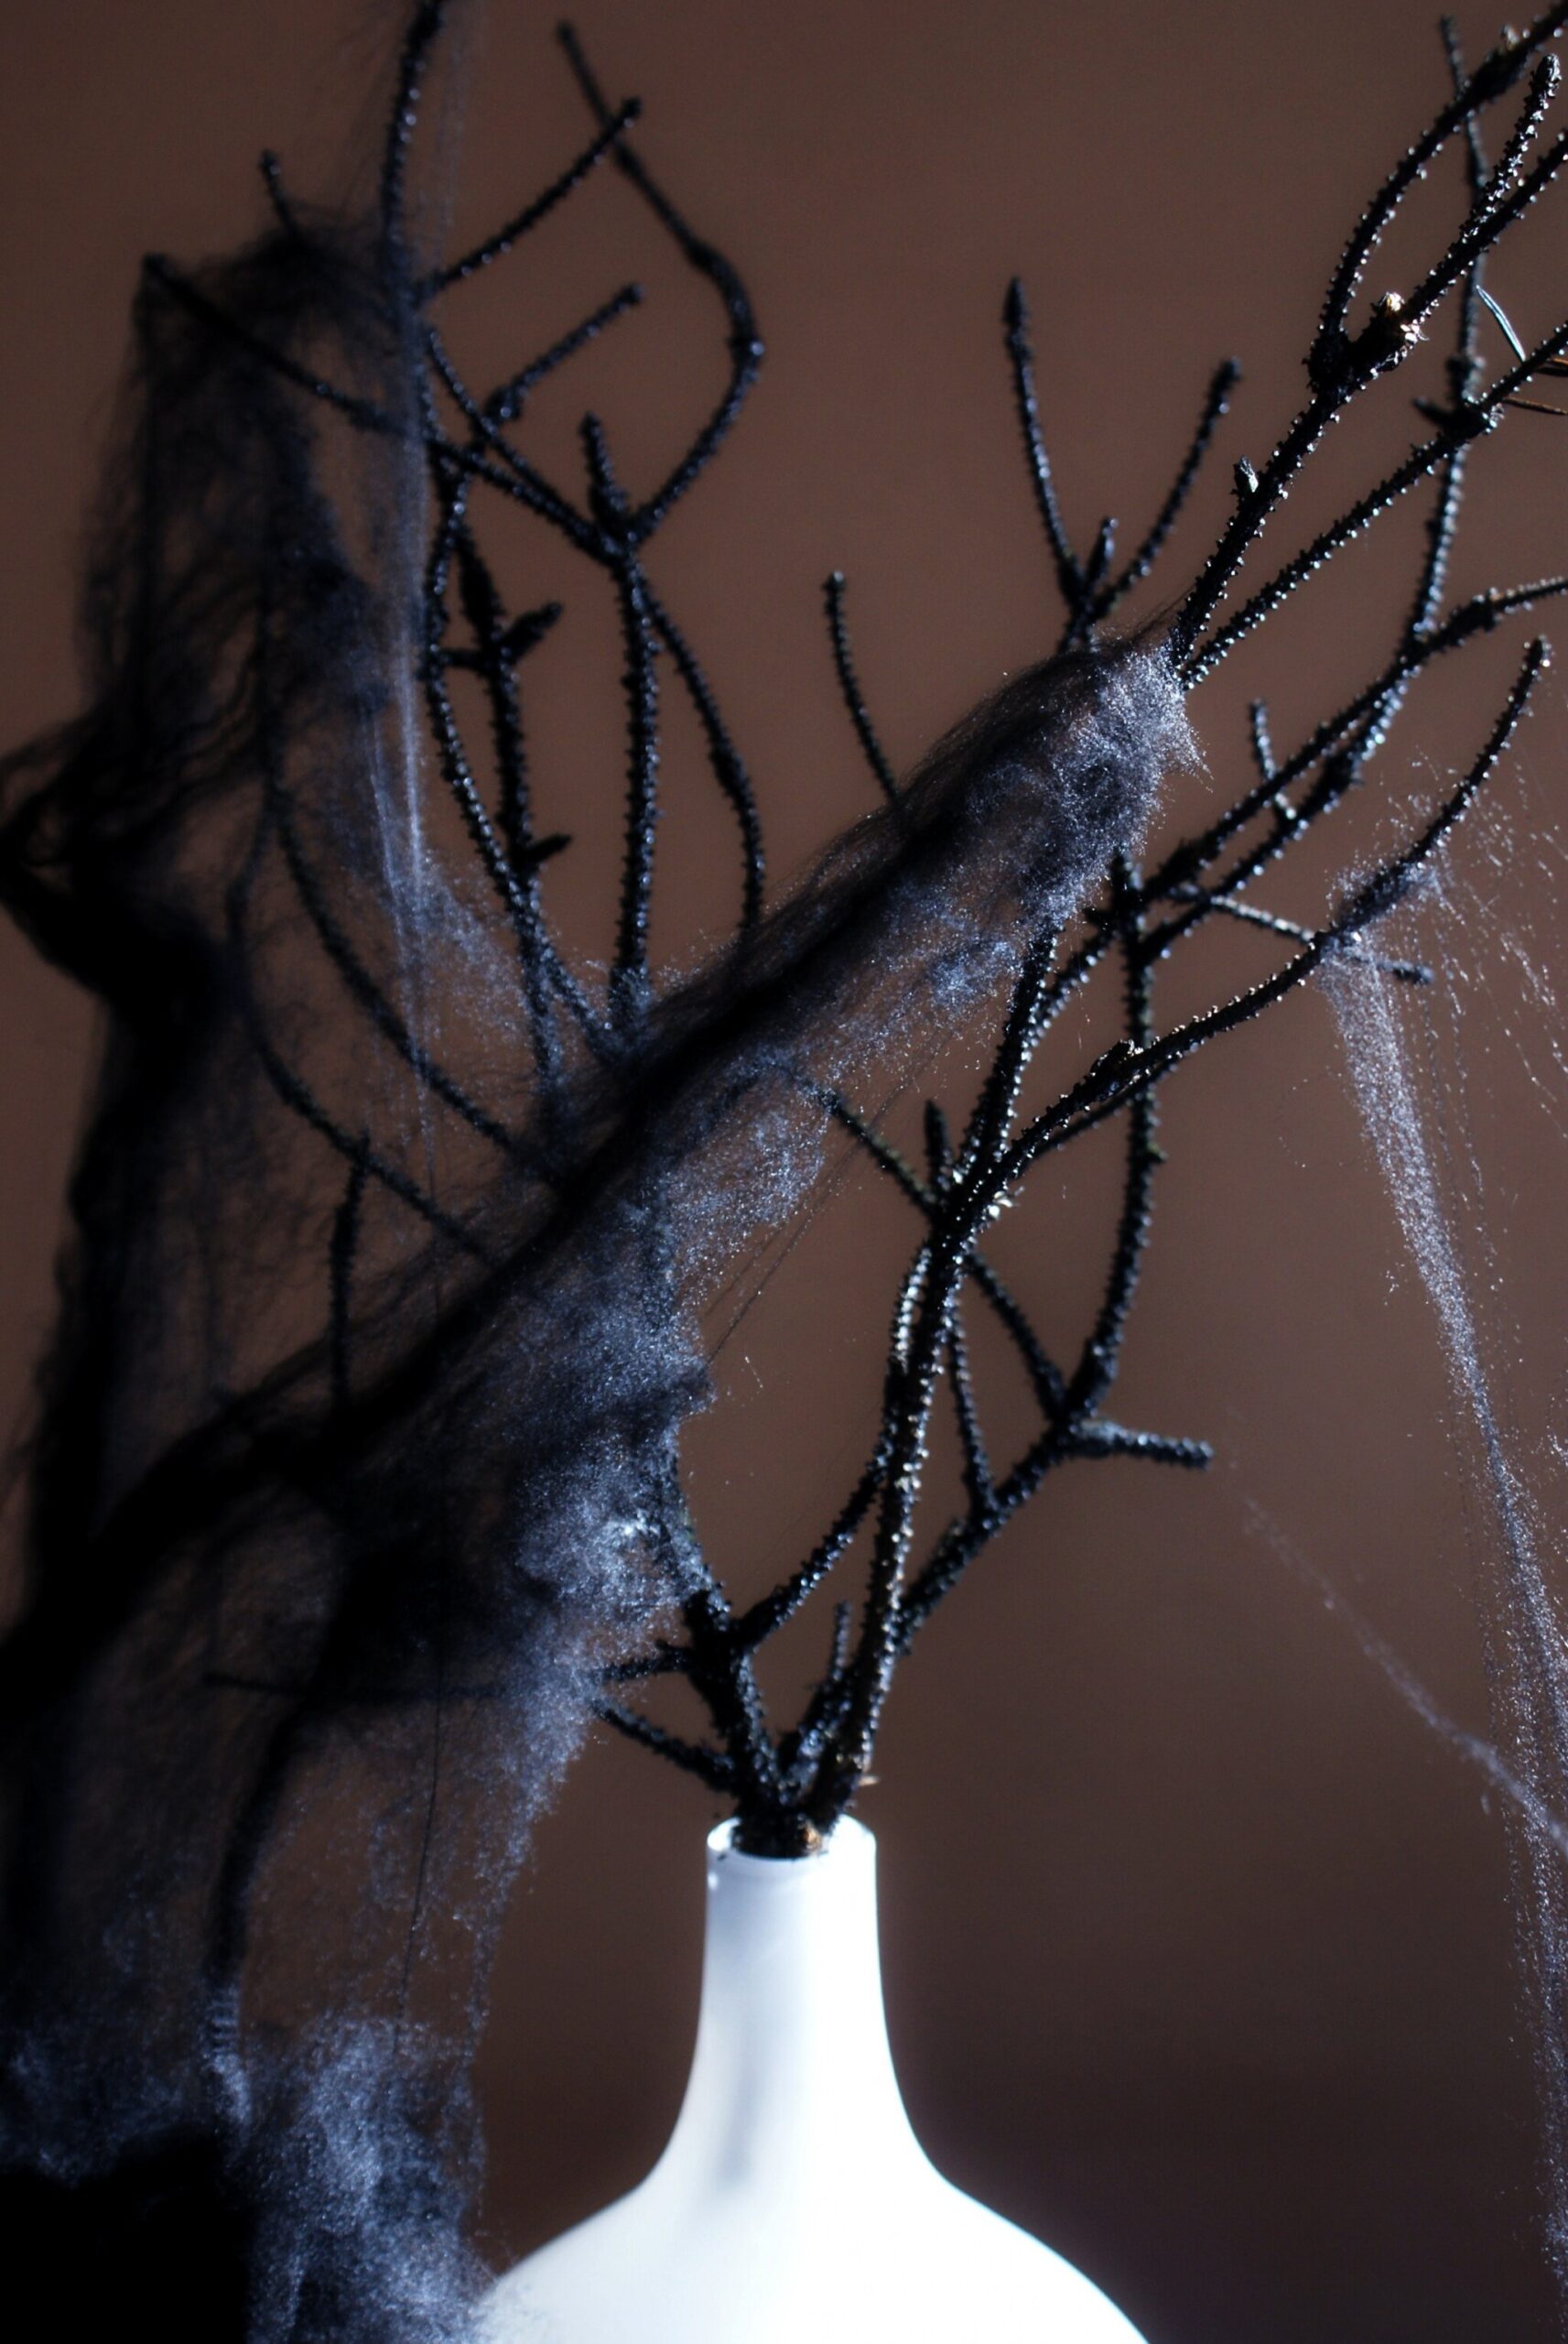 diy halloween decorations home ideas bleeding blood candle black twigs spider faidate idee decor candela sangue francinesplaceblog 1.JPG6